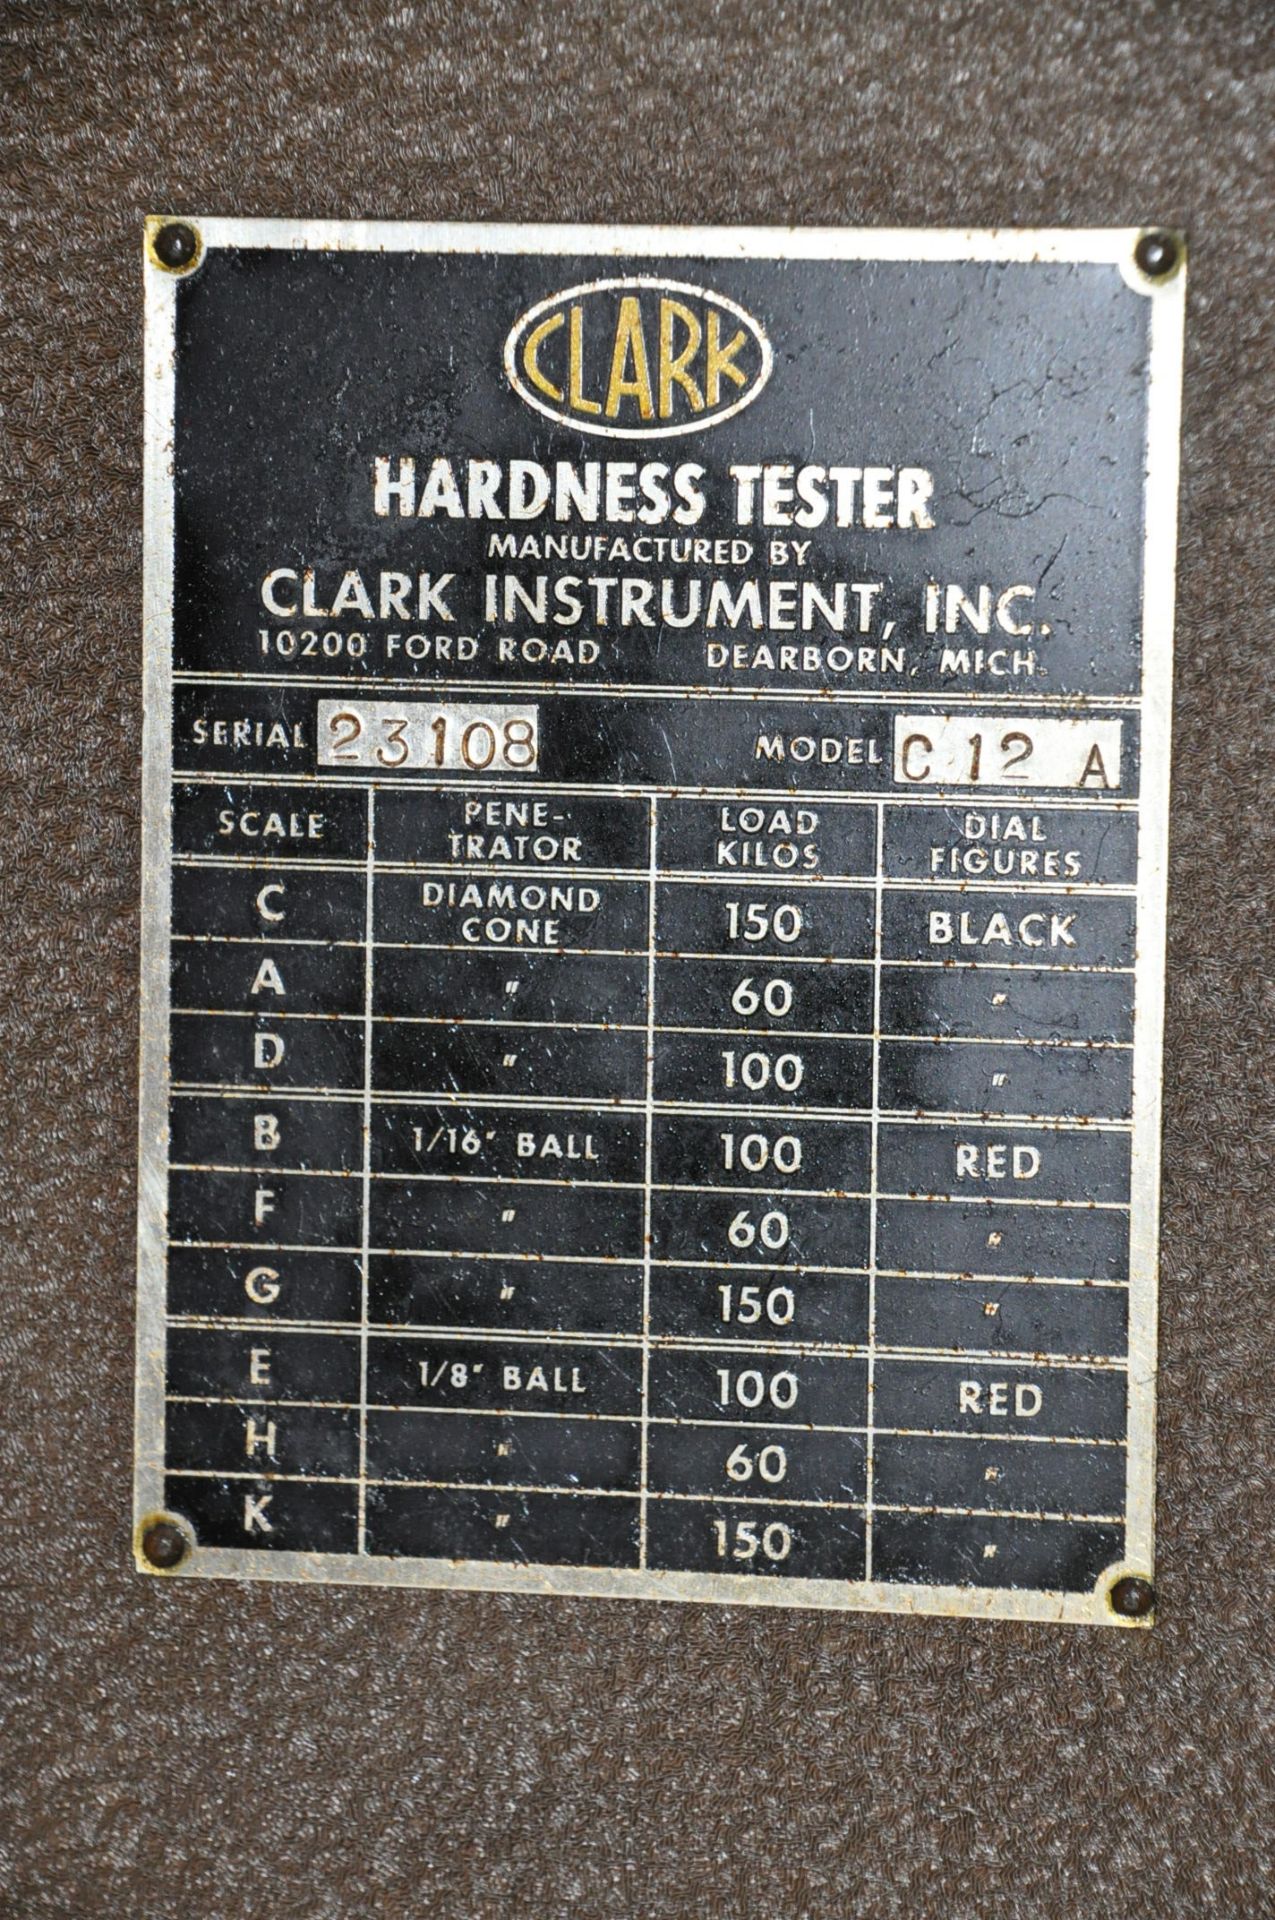 Clark Model C 12 A, Hardness Tester, S/n 23108 - Image 4 of 4